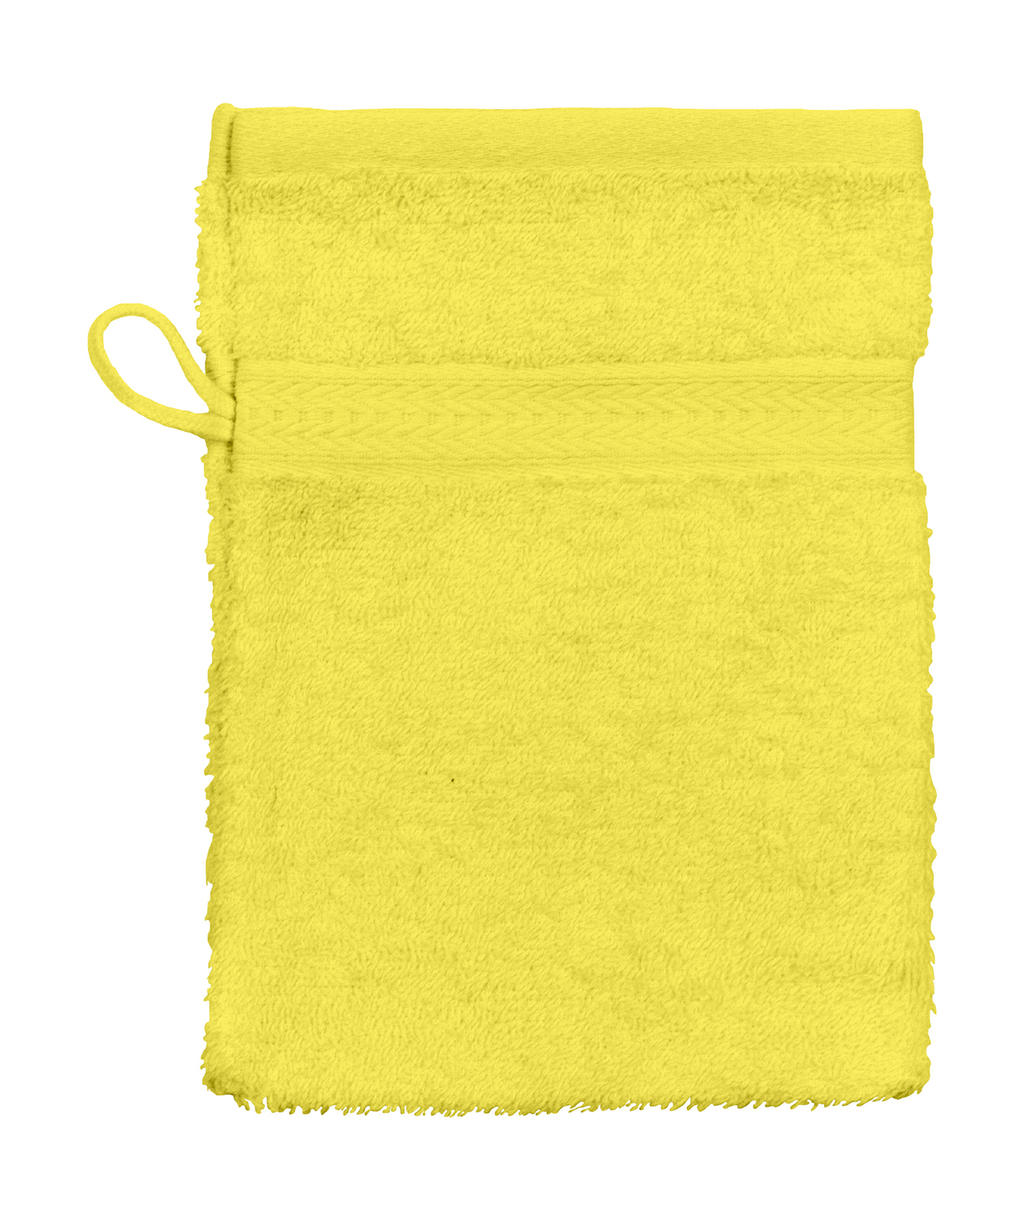  Rhine Wash Glove 16x22 cm in Farbe Bright Yellow